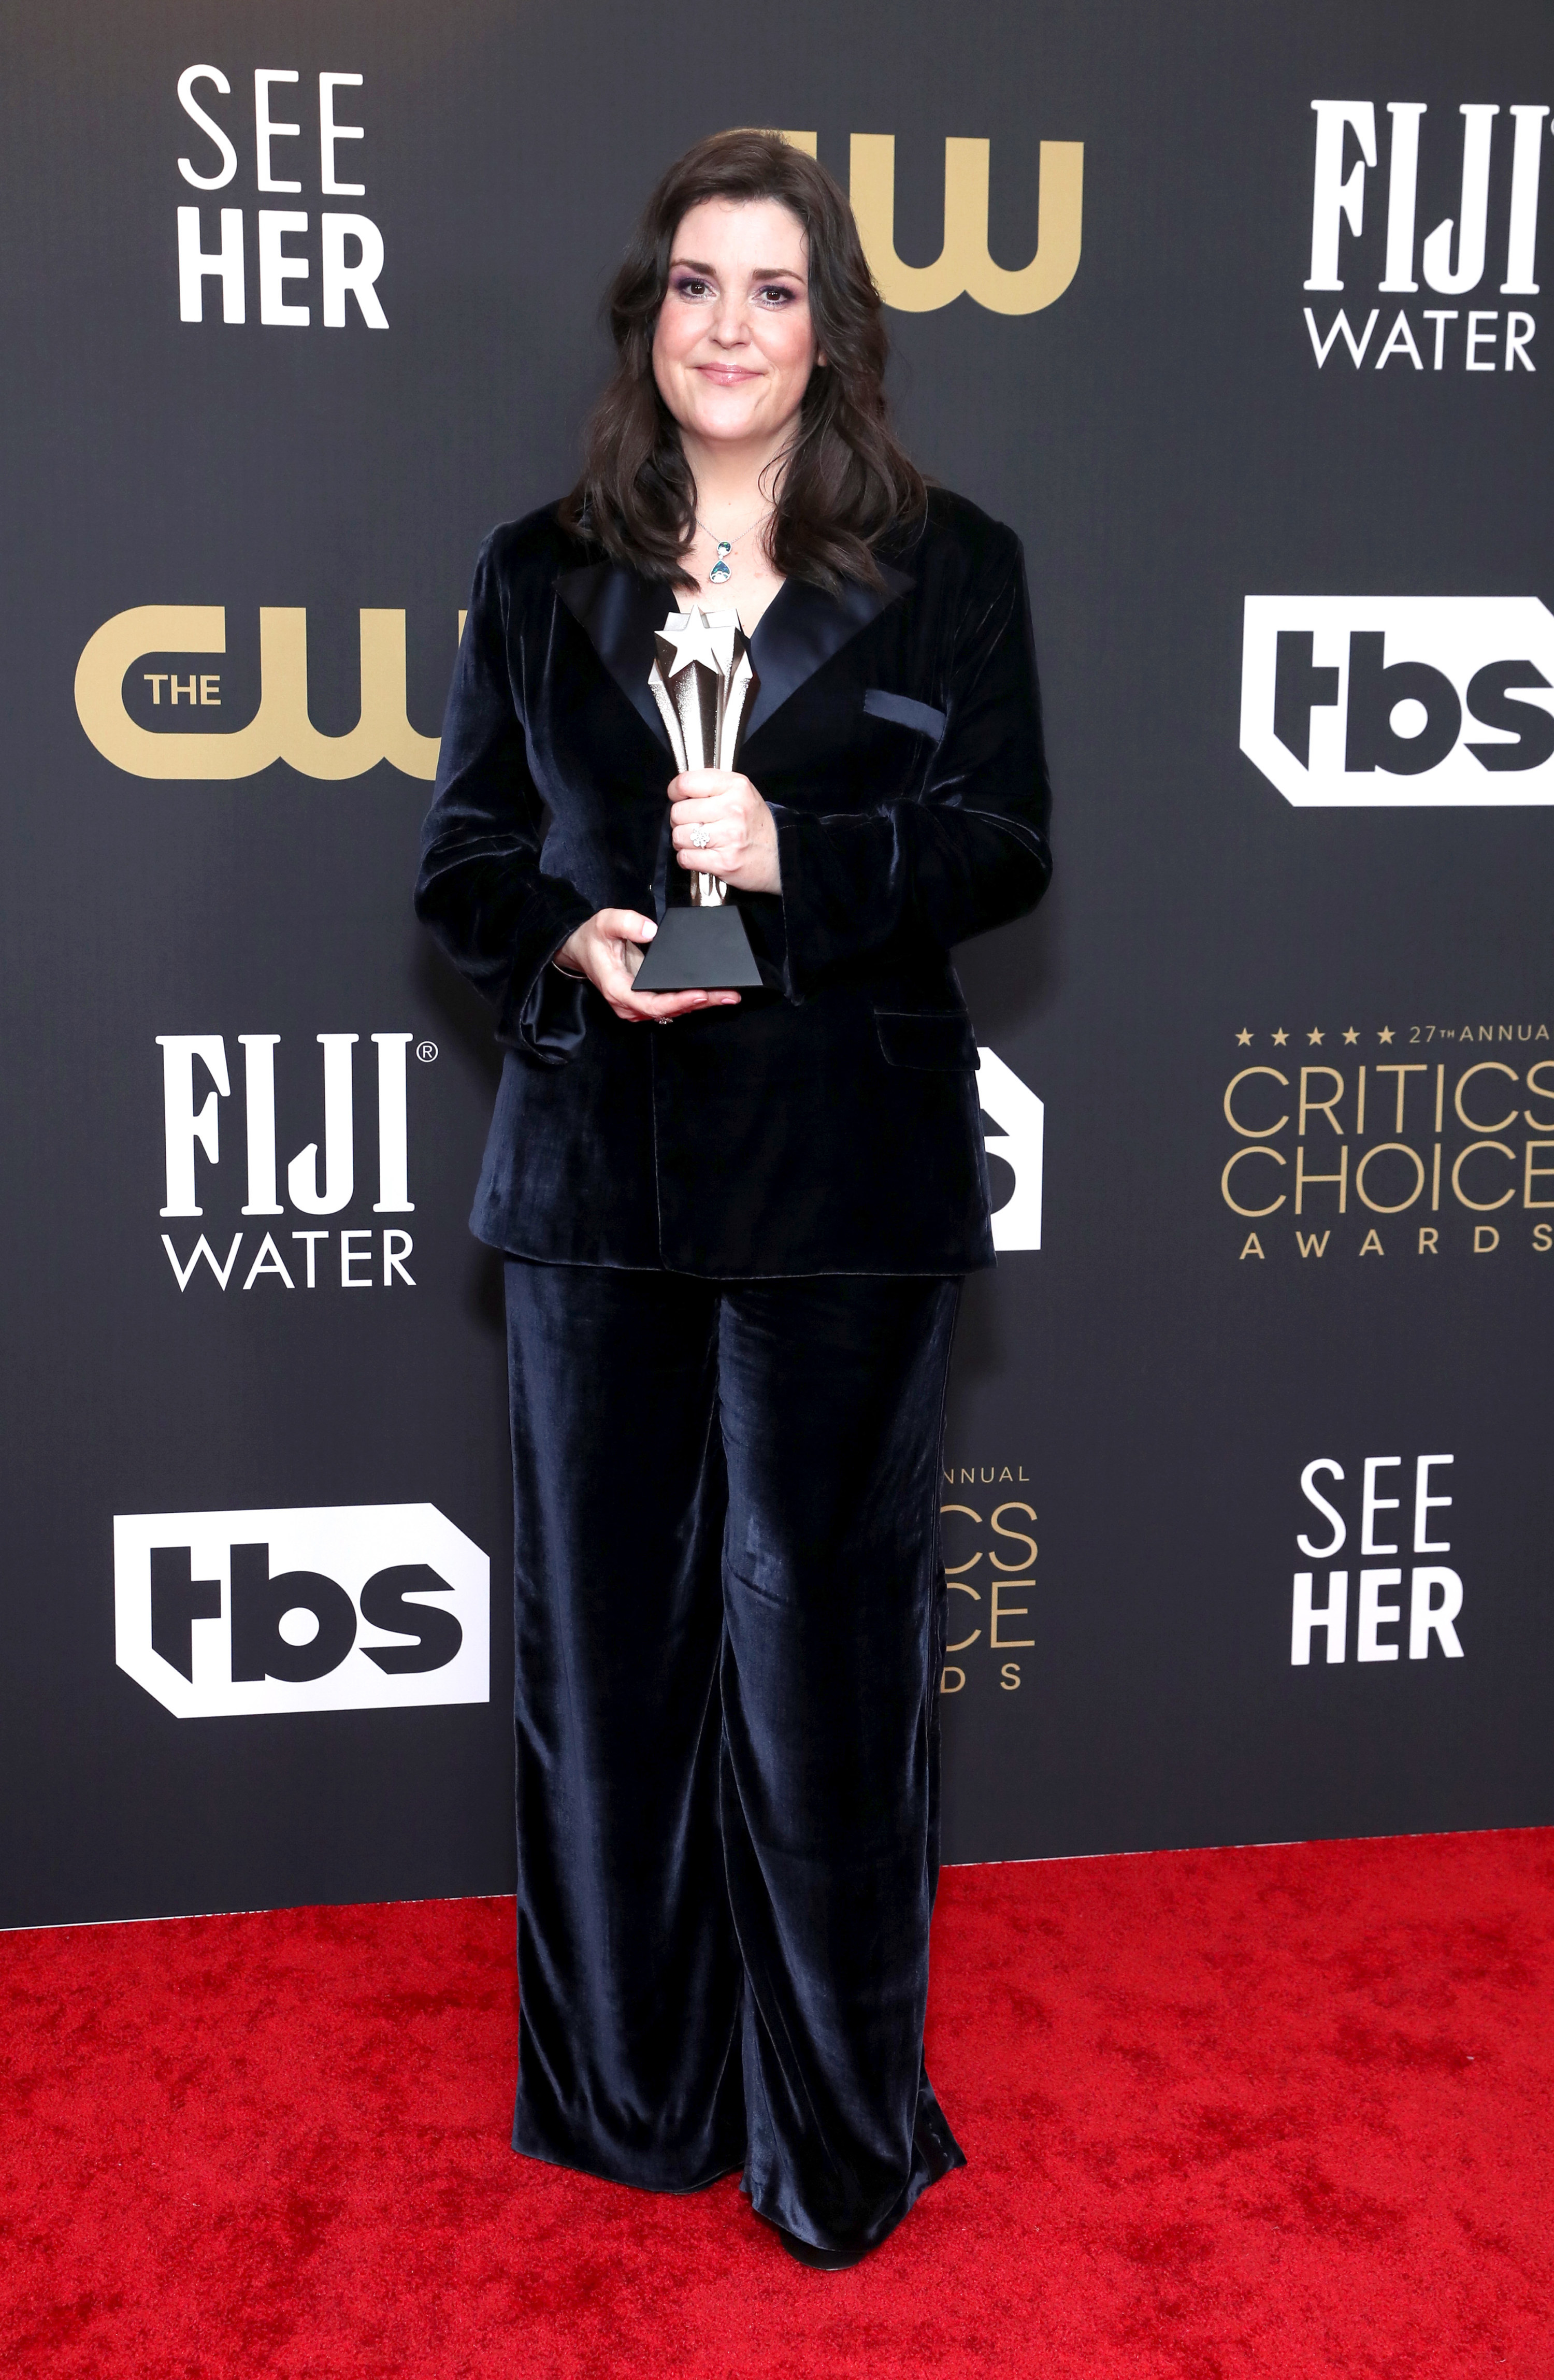 Melanie on the red carpet holding a Critics Choice award